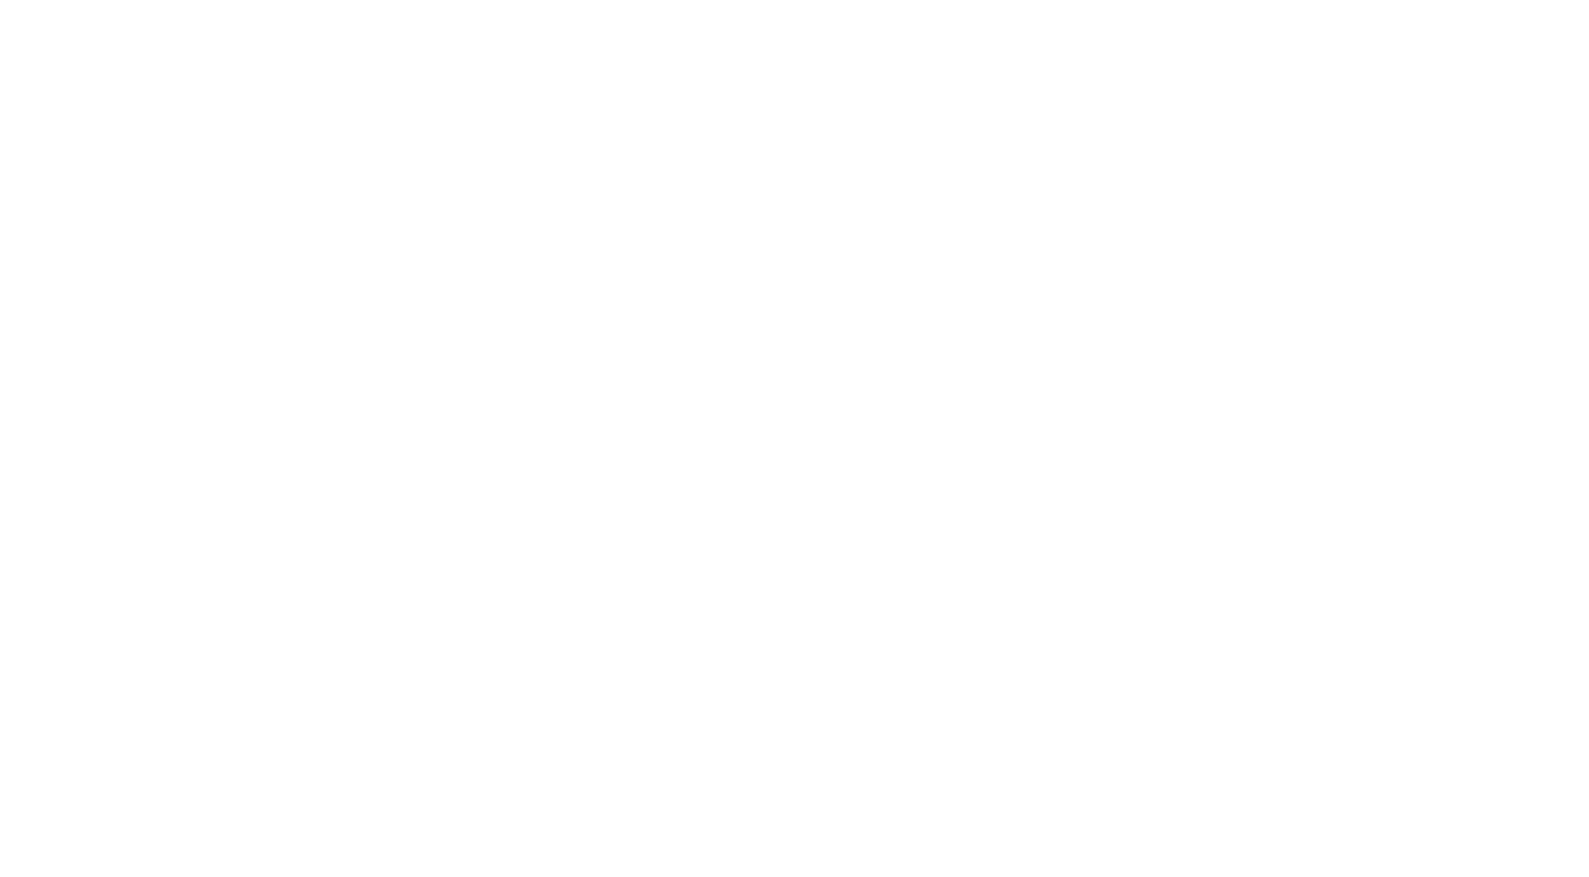 Solaris Oilfield Infrastructure logo large for dark backgrounds (transparent PNG)